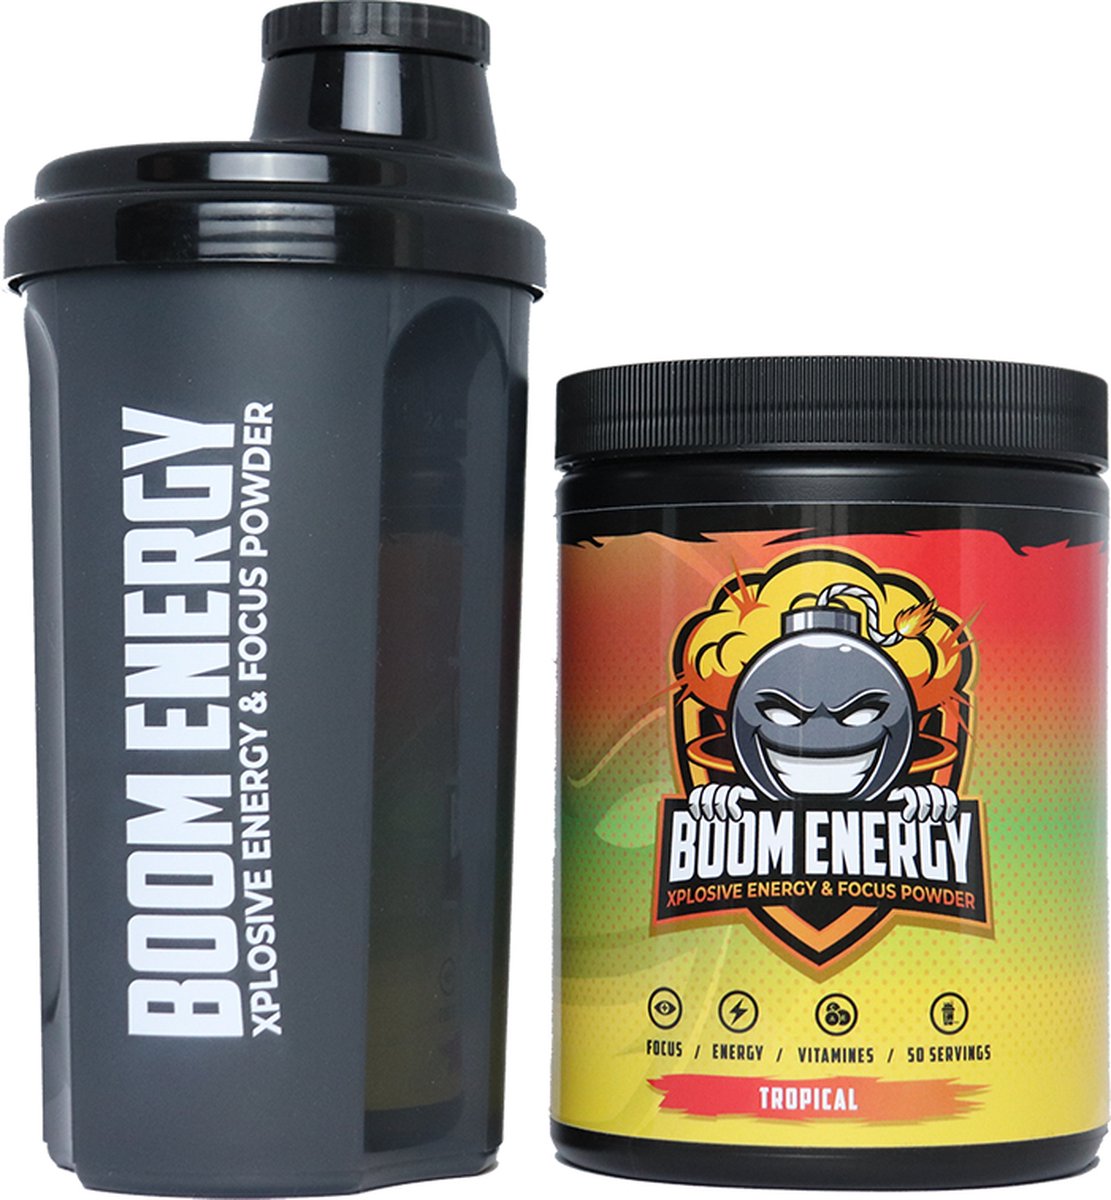 Boom Energy Tropical met shaker - Suikervrije Gaming Energy drink - Pre workout - 50 servings